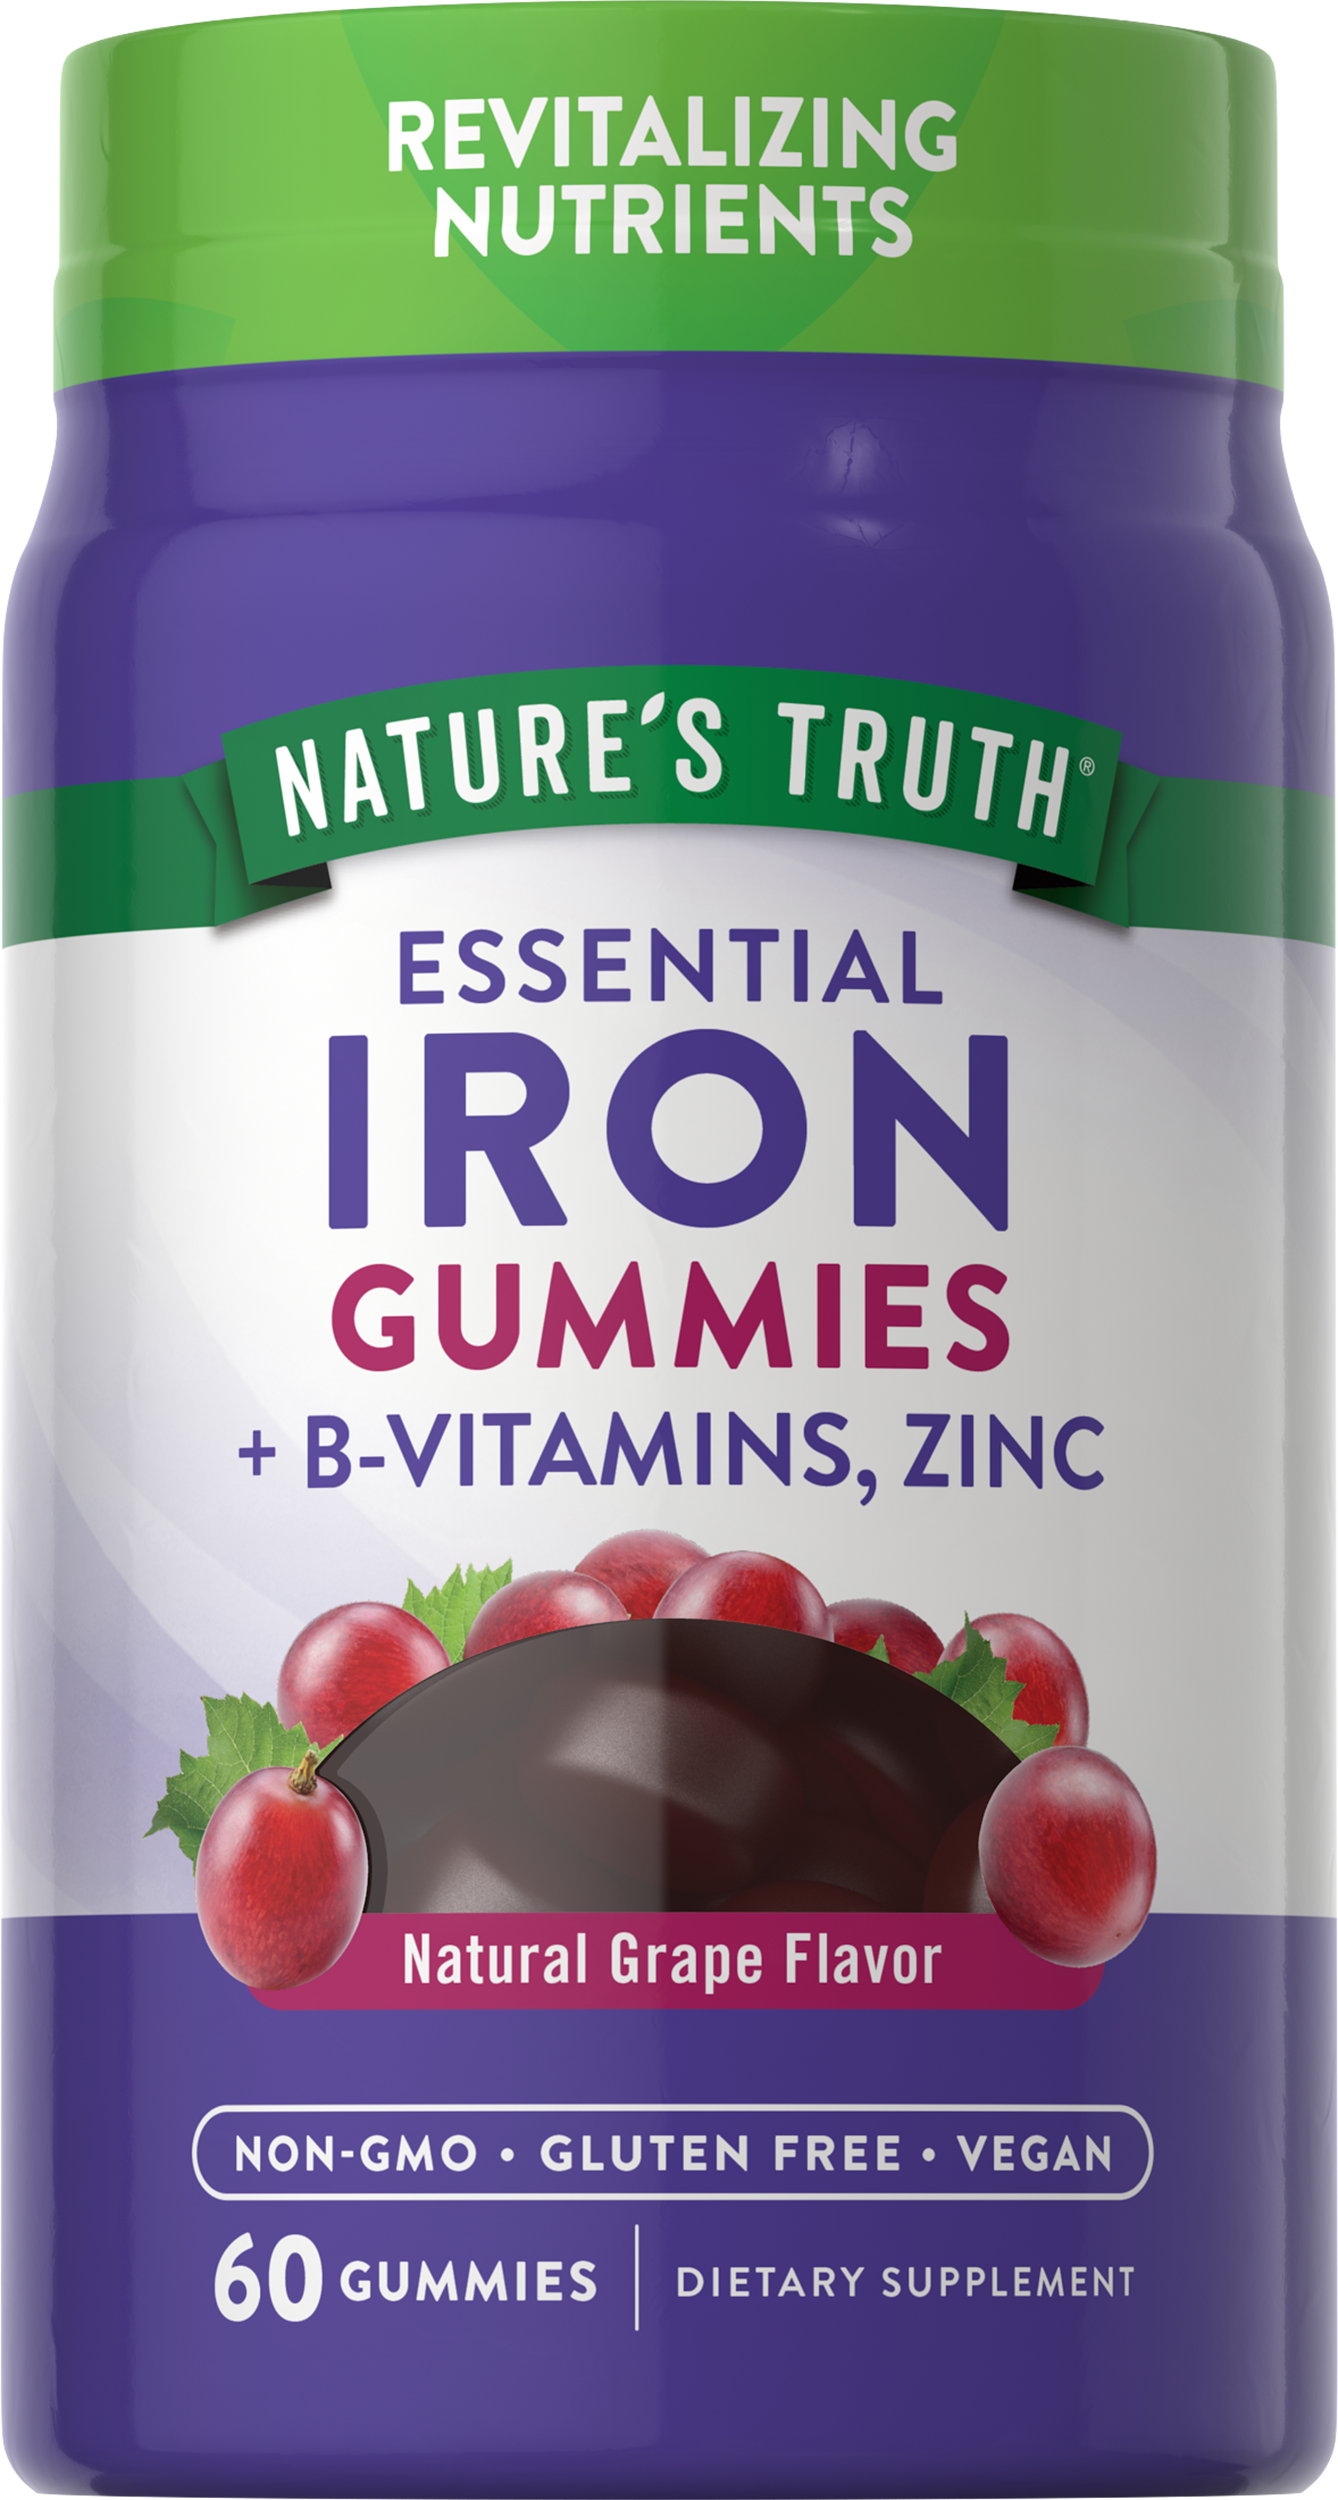 Iron with B-Vitamins, Zinc